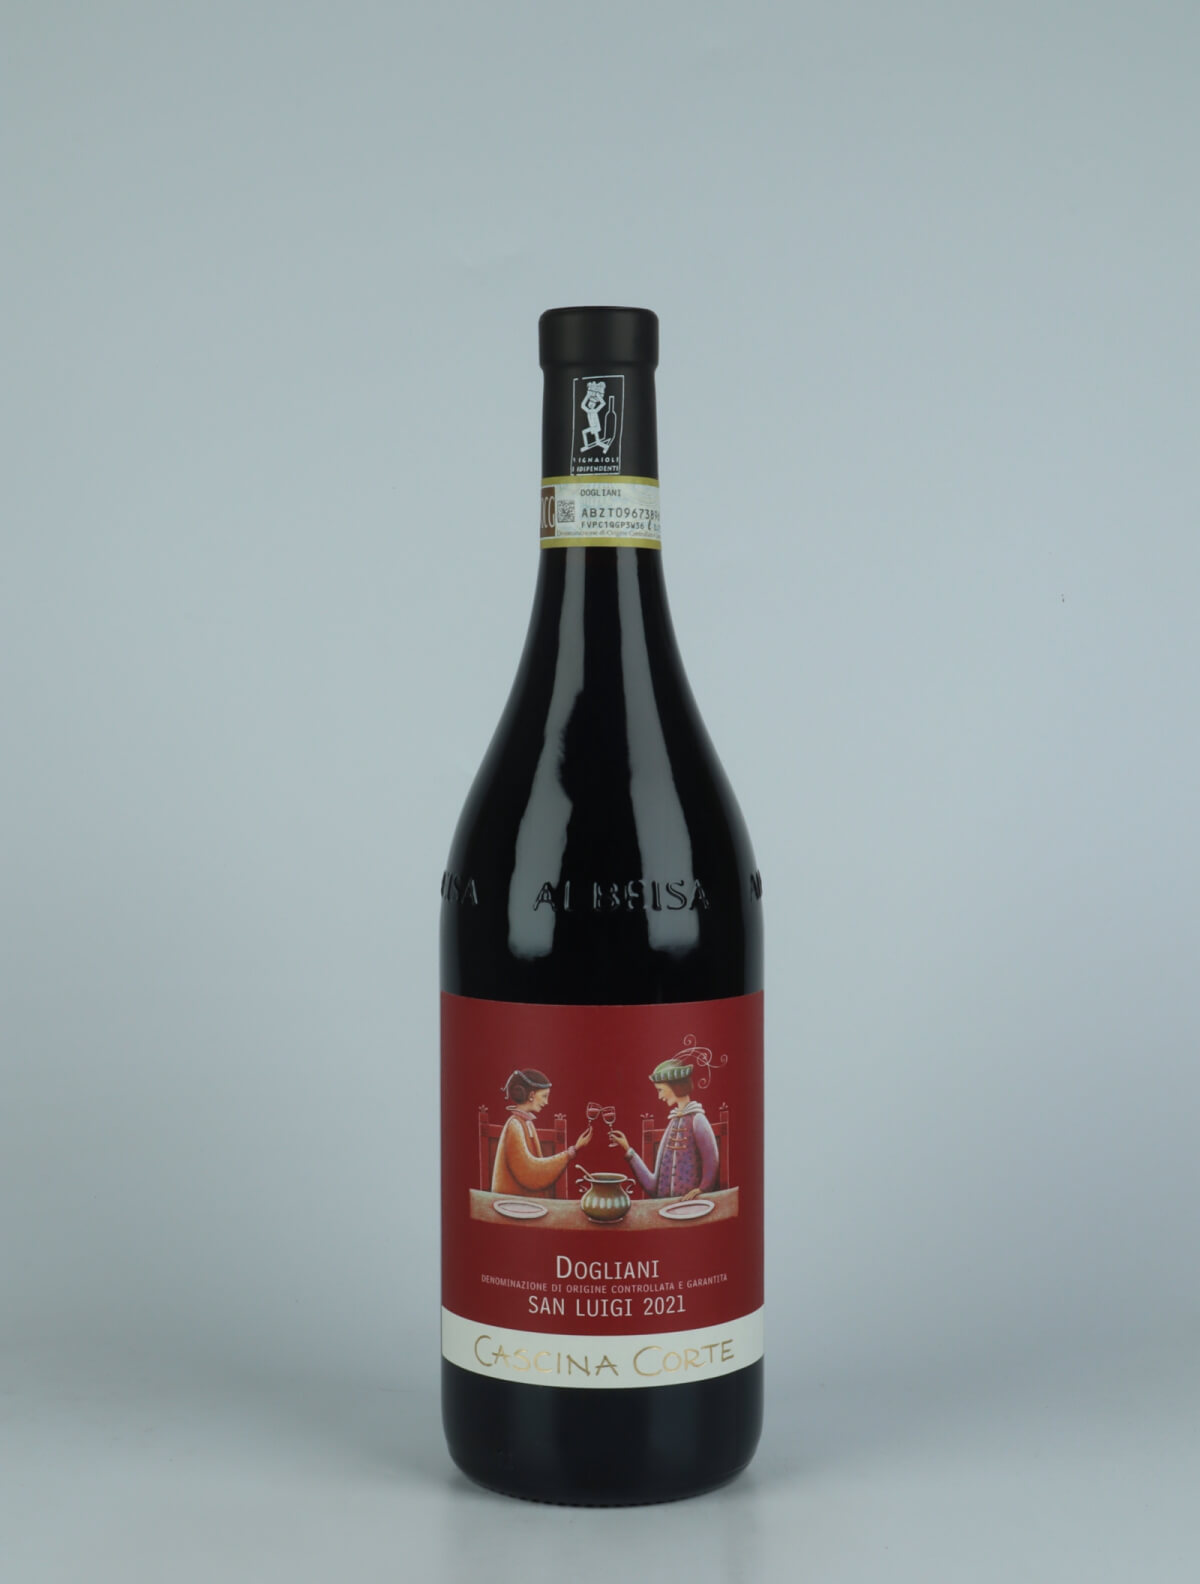 A bottle 2021 Dogliani - San Luigi Red wine from Cascina Corte, Piedmont in Italy